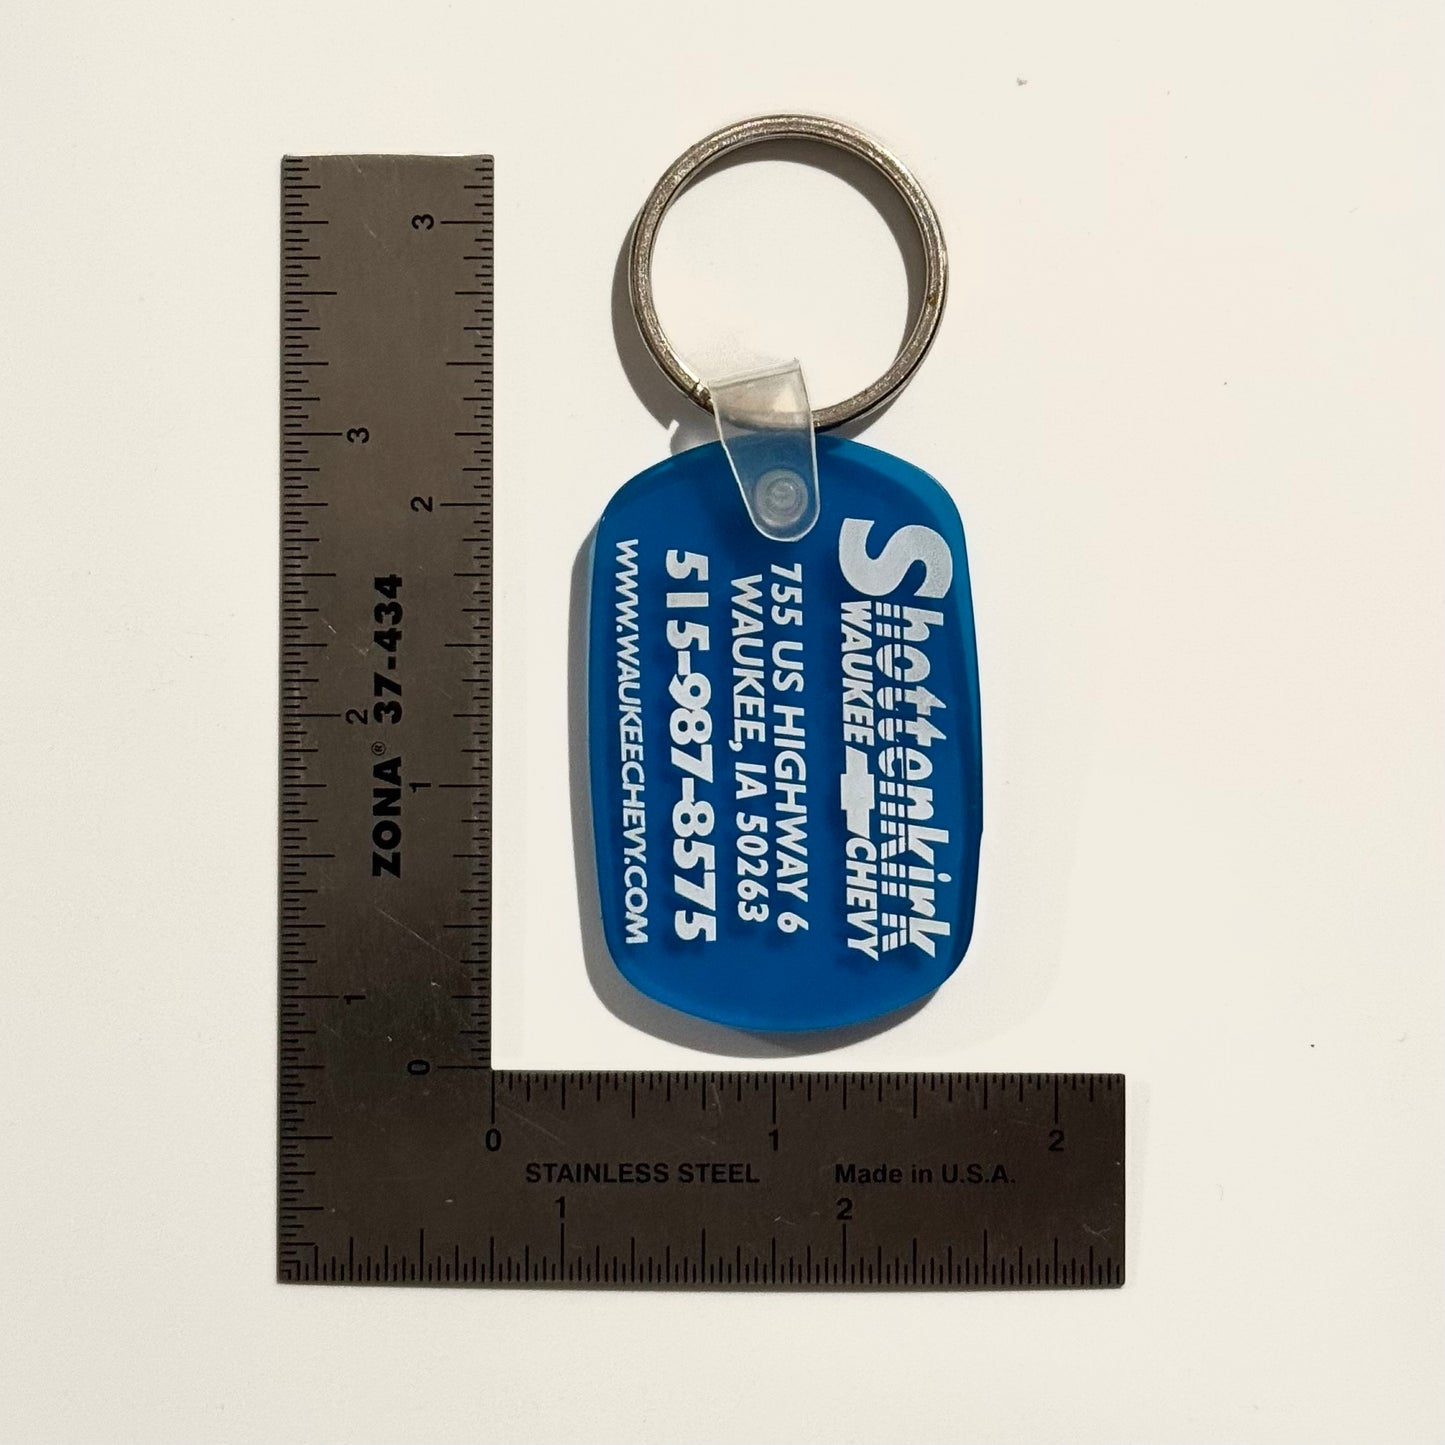 ‘Shottenkirk Waukee (IA) Chevy’ Keychain Key Ring Blue Rubber Oval